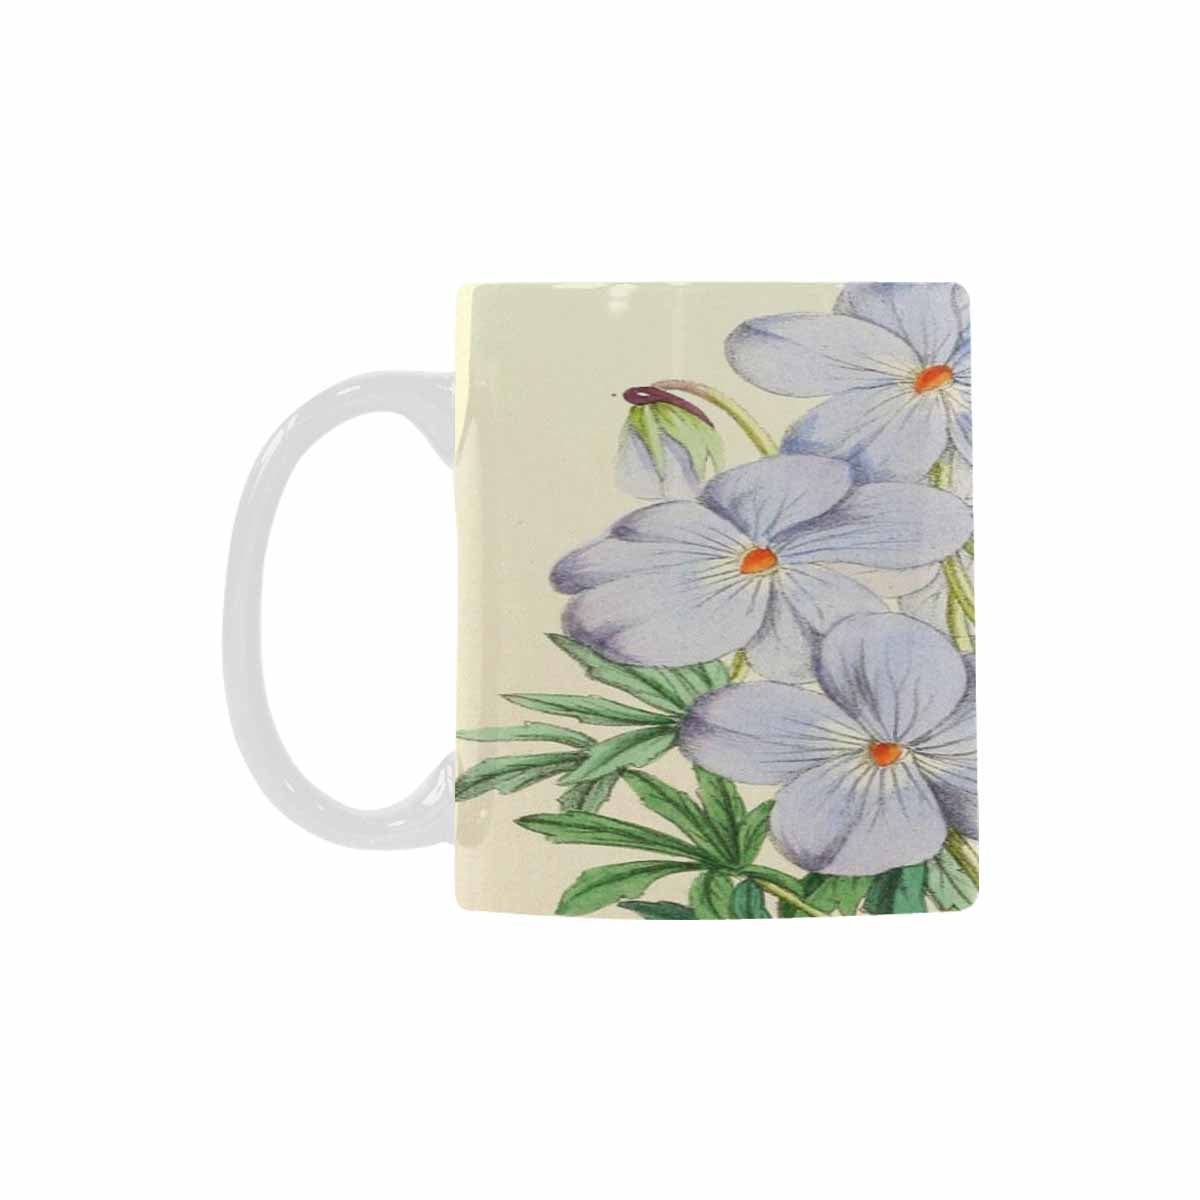 Vintage floral coffee mug or tea cup, Design 13